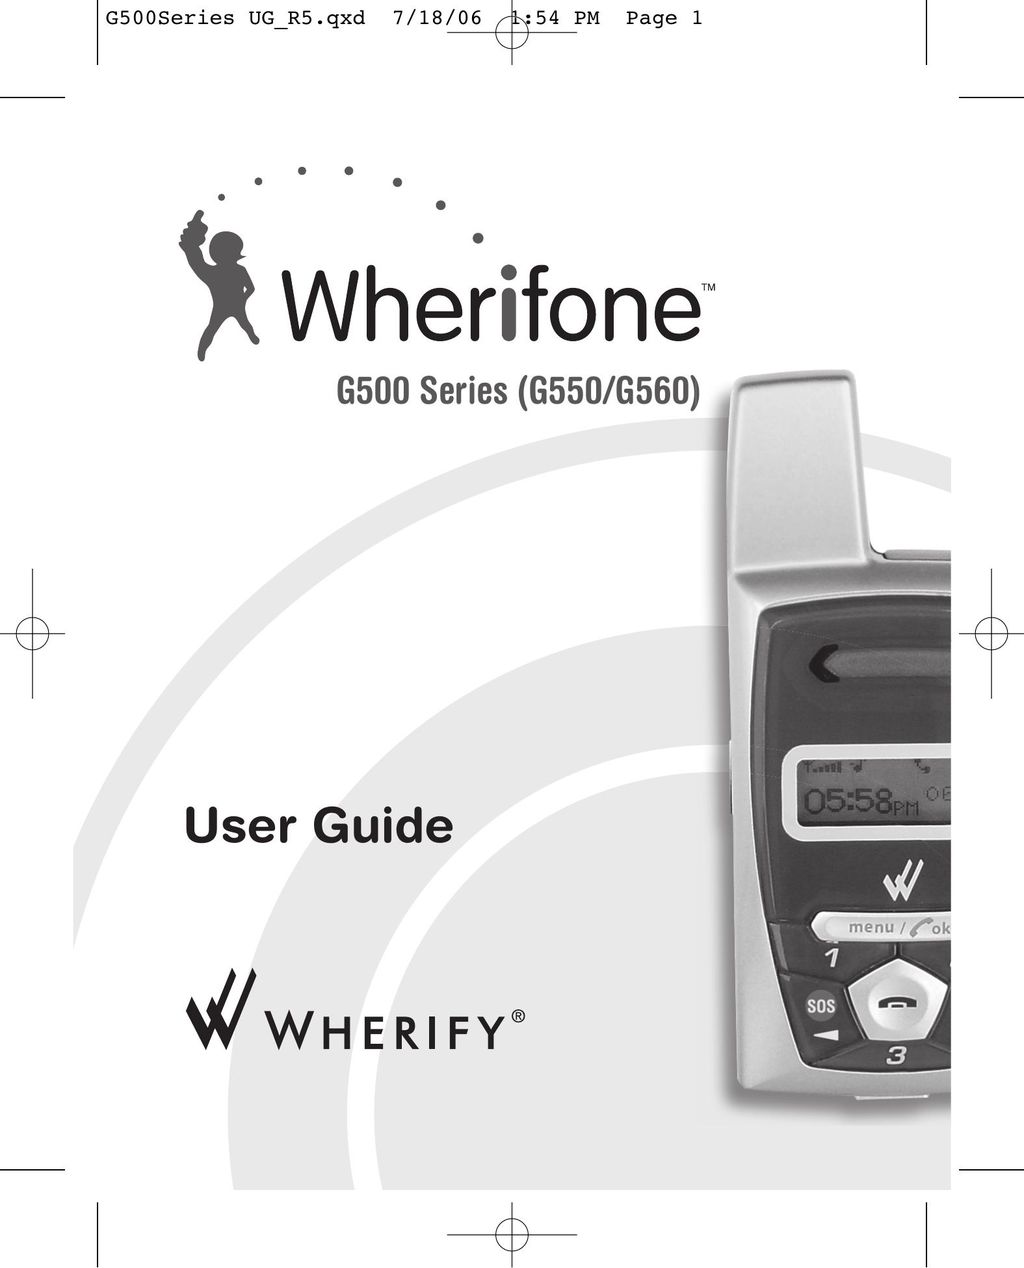 Wherify Wireless G500 Series Cell Phone User Manual